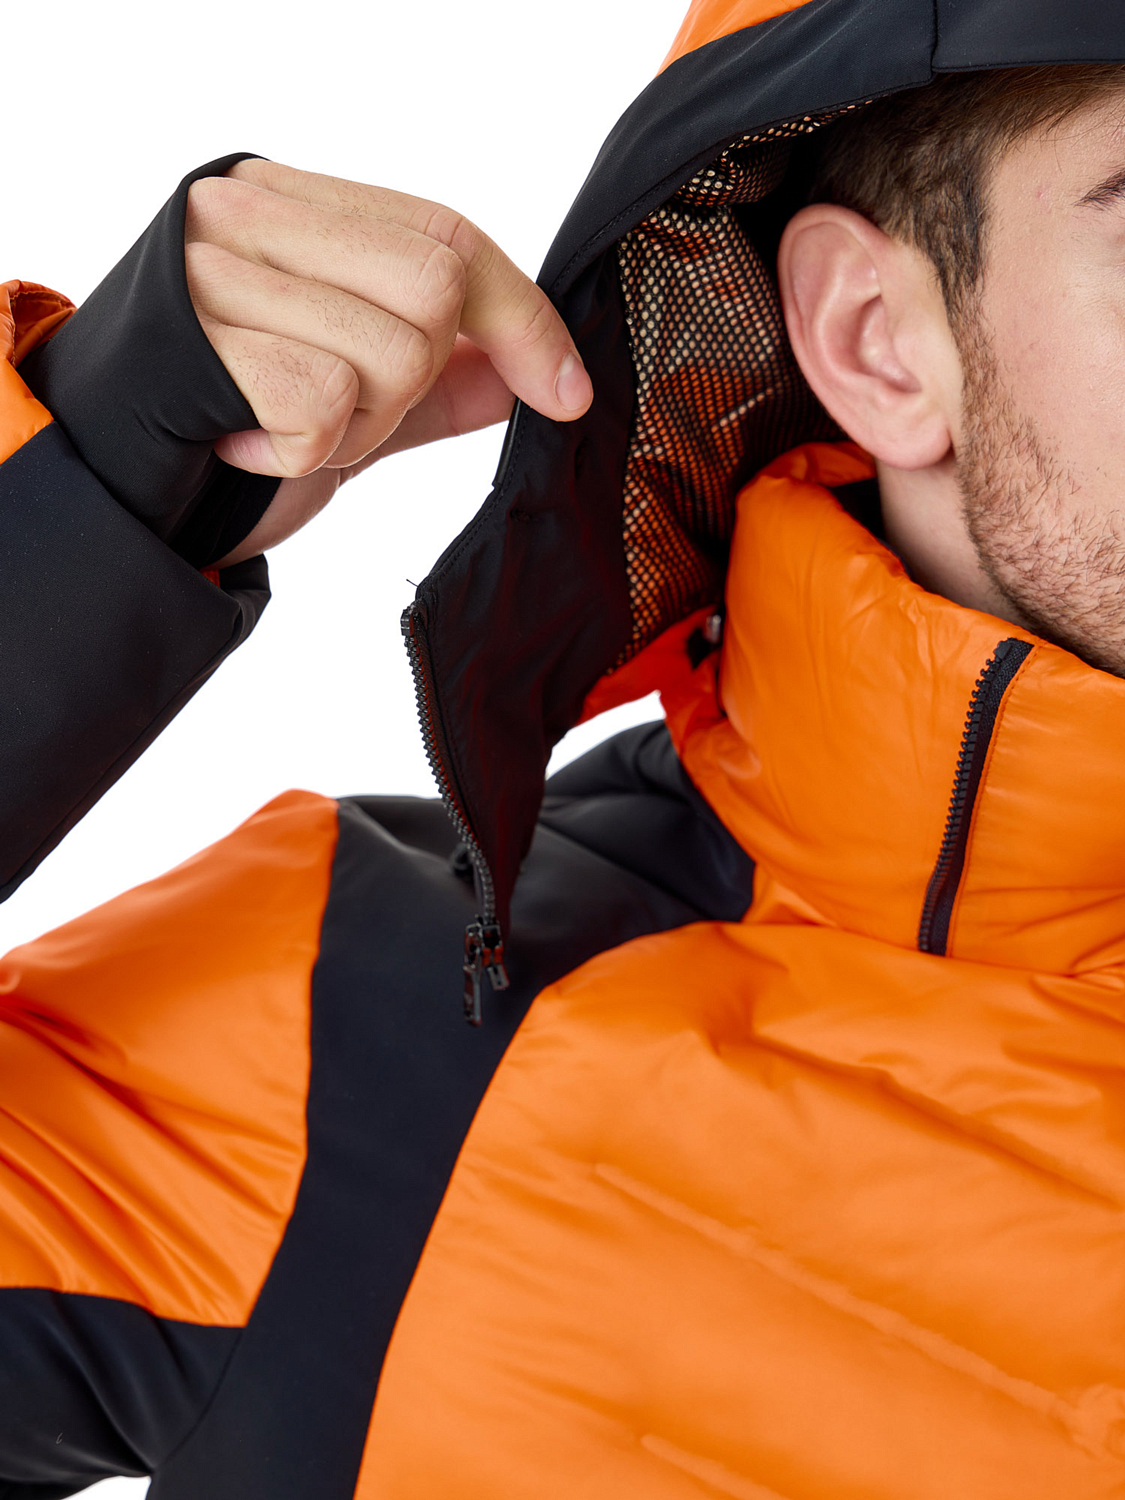 Куртка горнолыжная EA7 Emporio Armani Ski Cortina Heat Sealed Fluo Orange